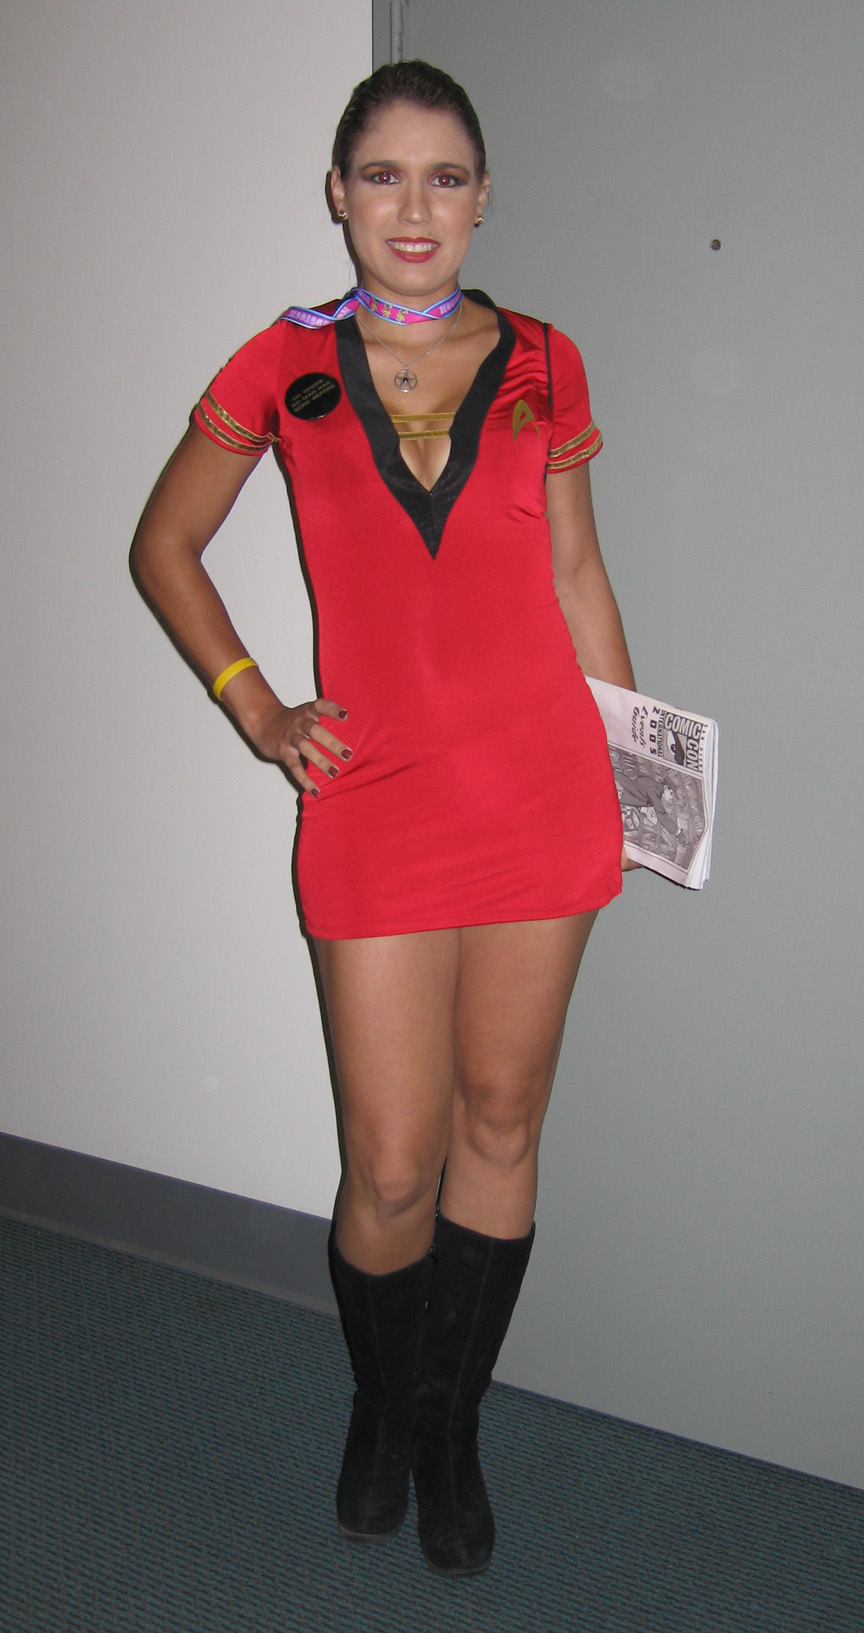 Lt. Uhura visits Comic Con!